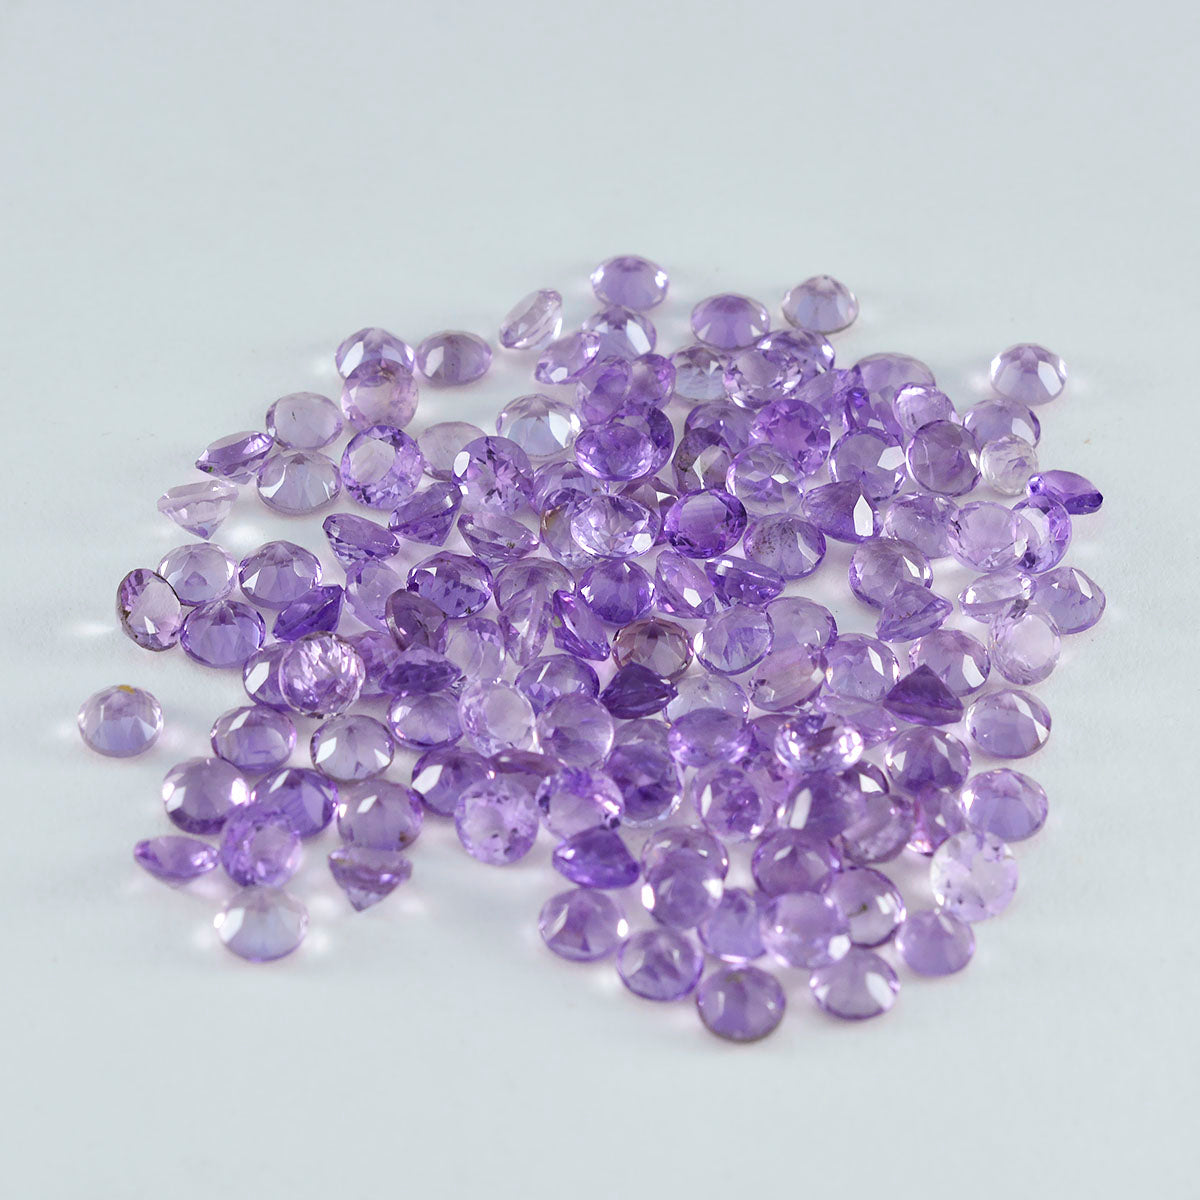 Riyogems 1PC Genuine Purple Amethyst Faceted 3x3 mm Round Shape startling Quality Gems